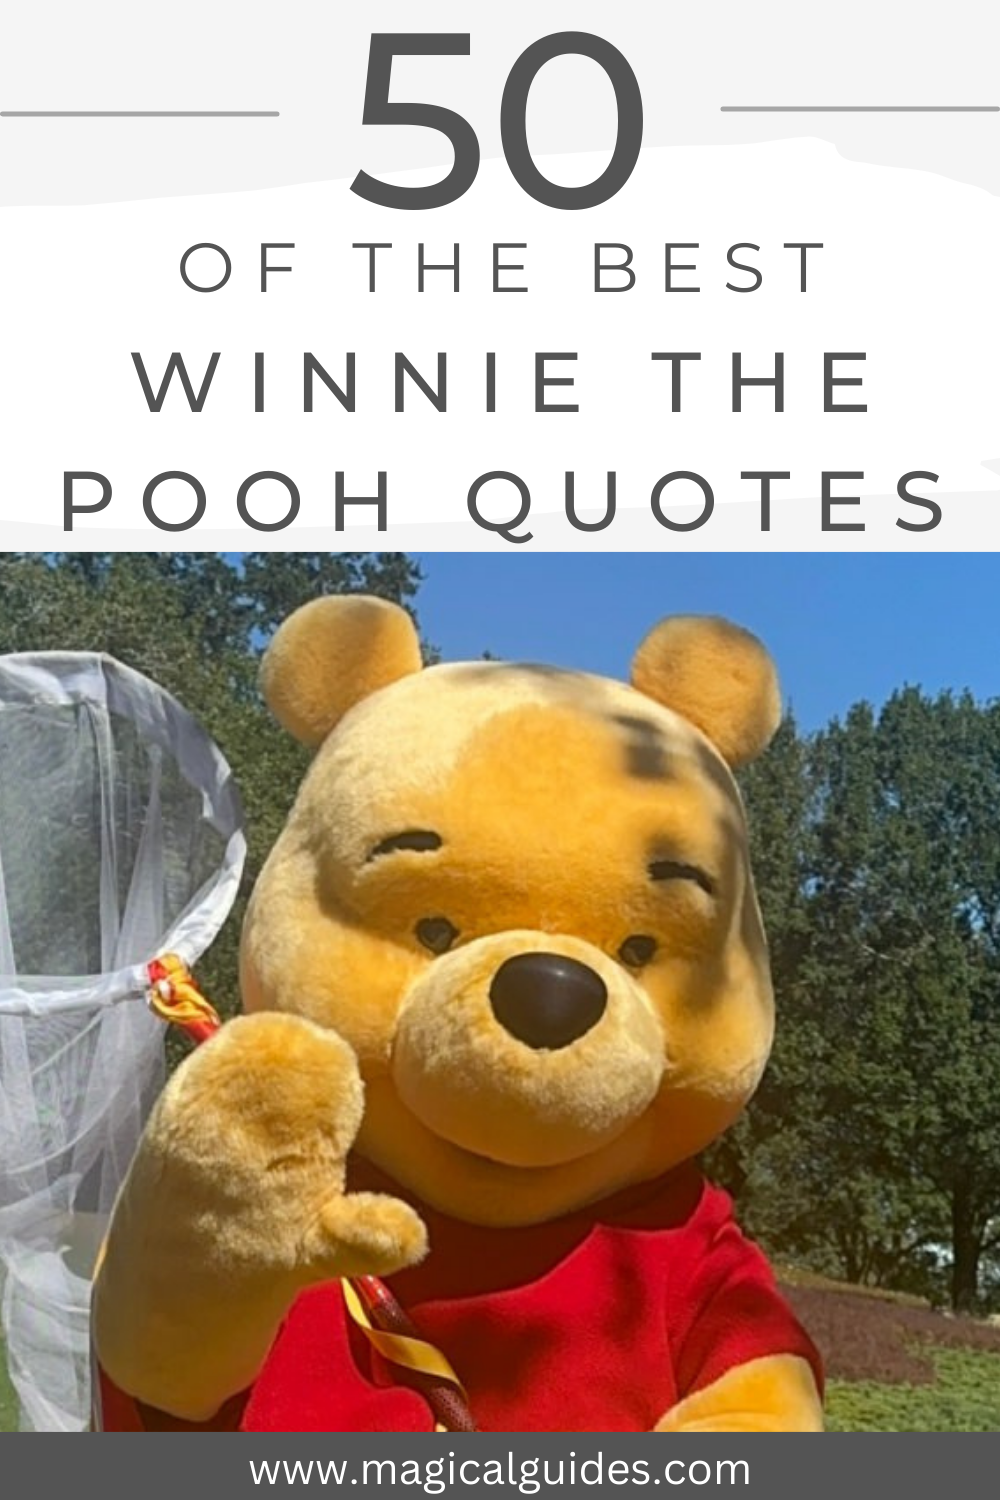 Winnie the Pooh quotes Inspirational, Winnie the Pooh quotes friendship, Winnie the Pooh quotes love, Winnie the Pooh quotes funny, and Winnie the Pooh quotes Wisdom.